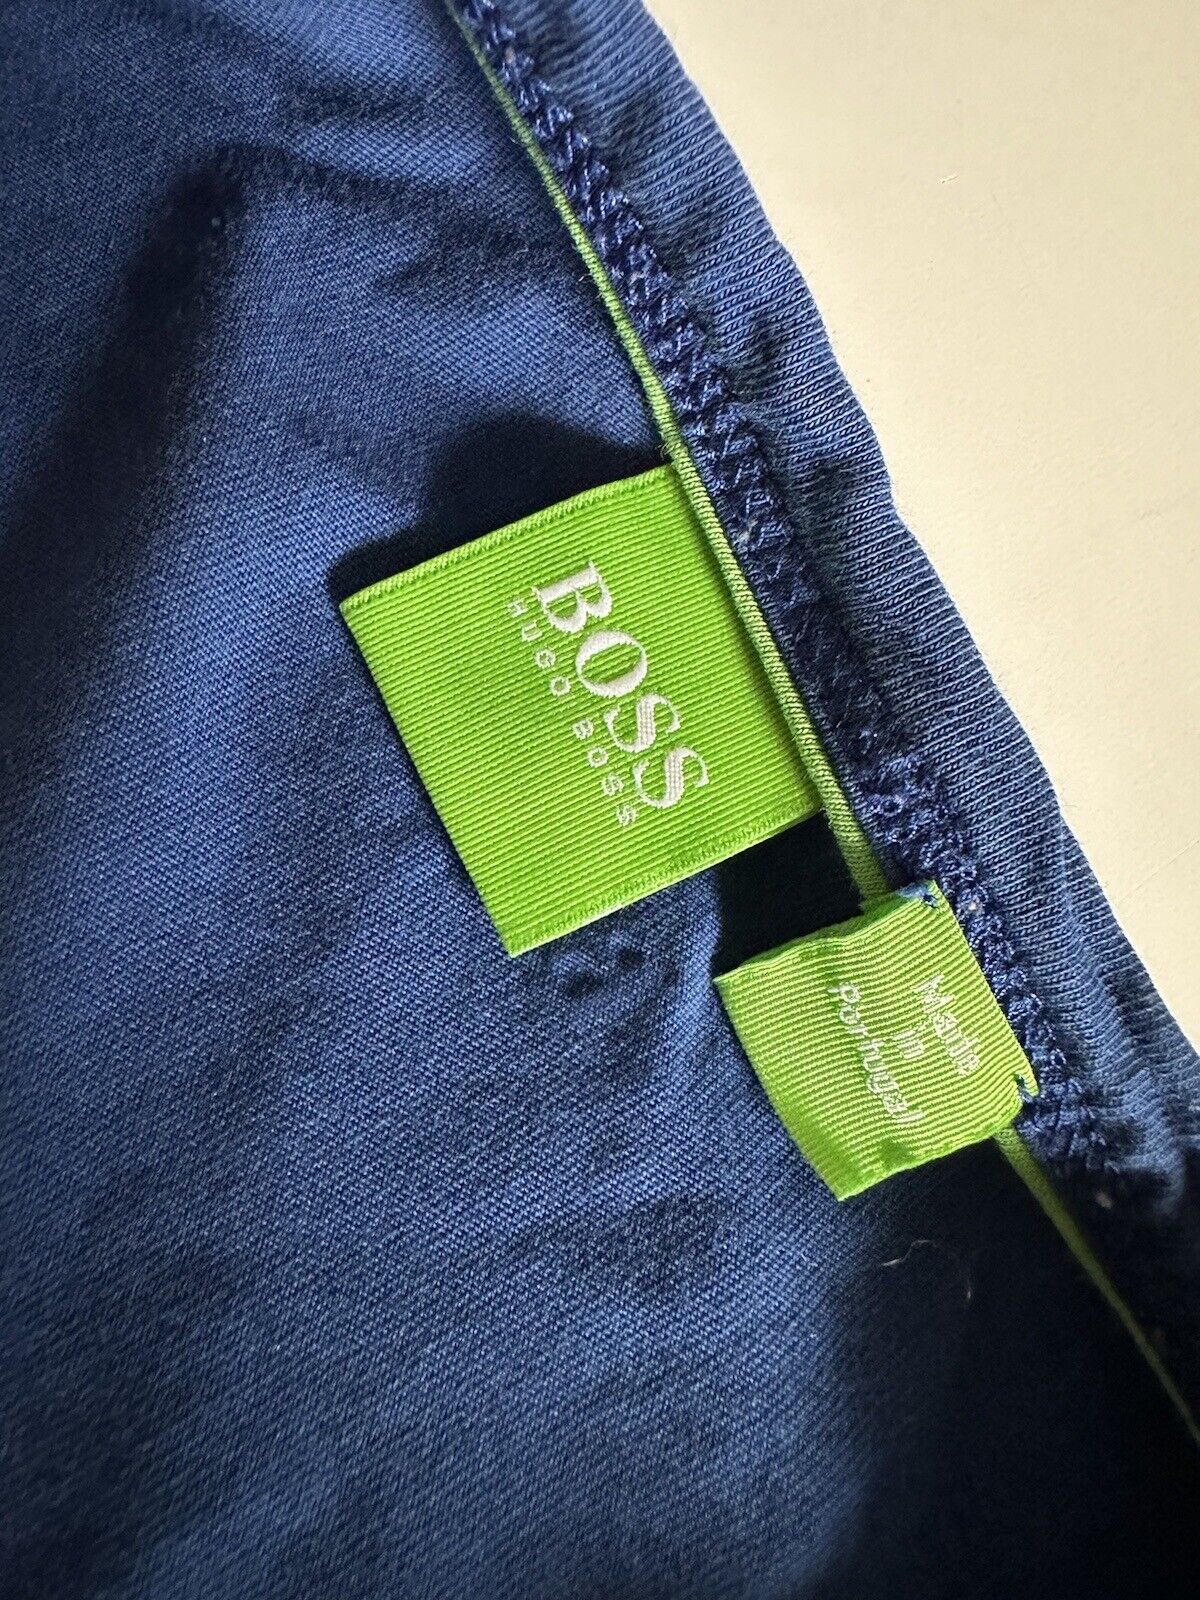 Boss Hugo Boss Green Label Logo Long Sleeve Blue T-Shirt L Made in Portugal